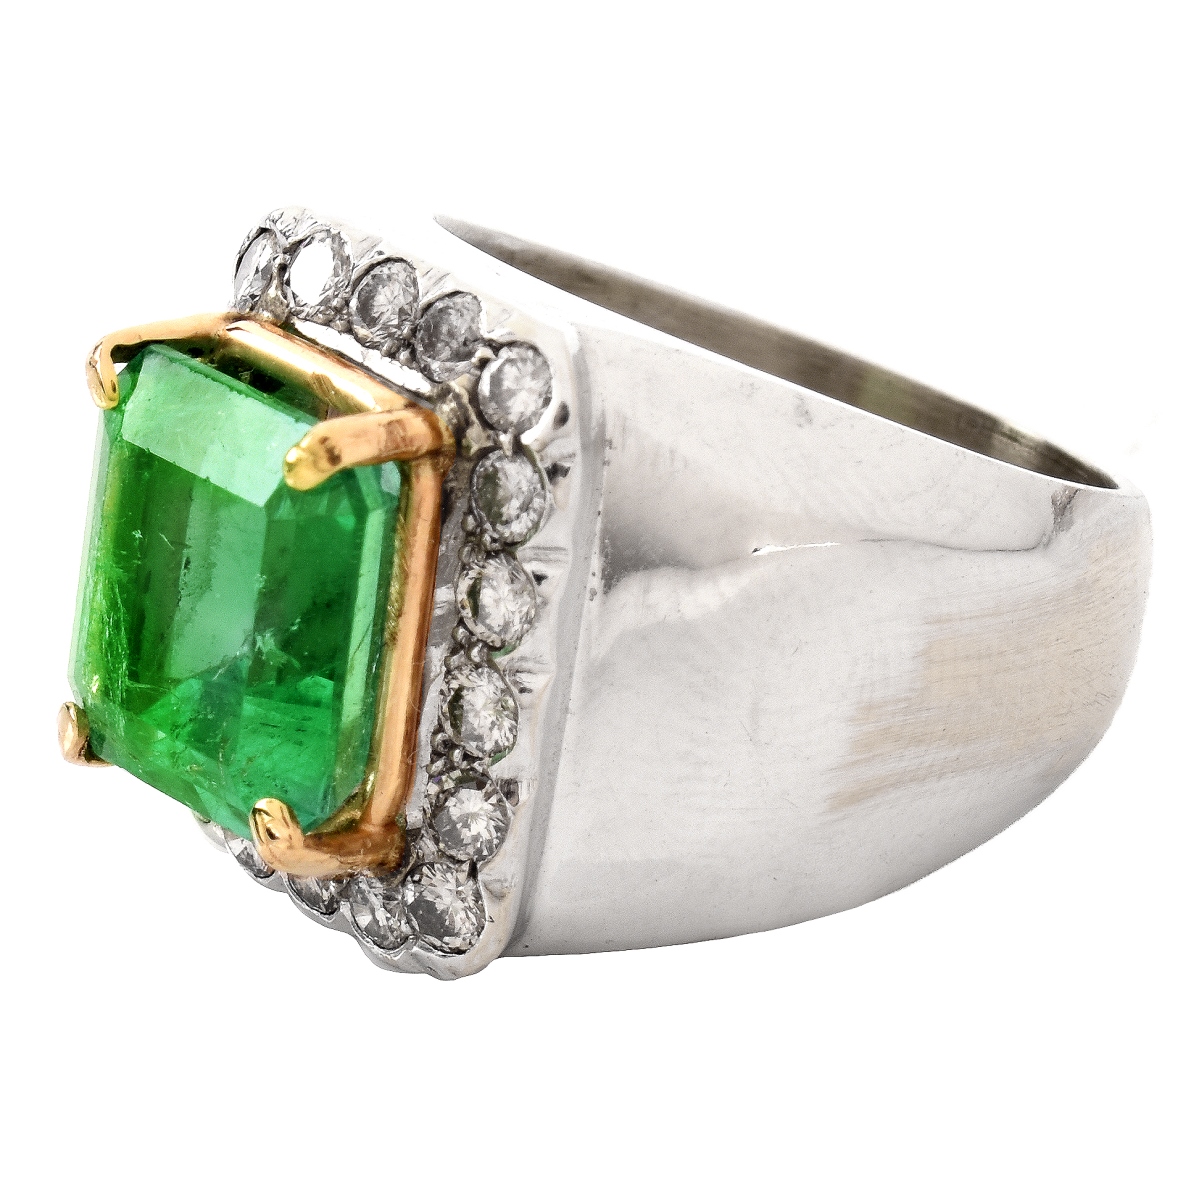 GAL 6.0 Carat Emerald, Diamond and 18K Ring